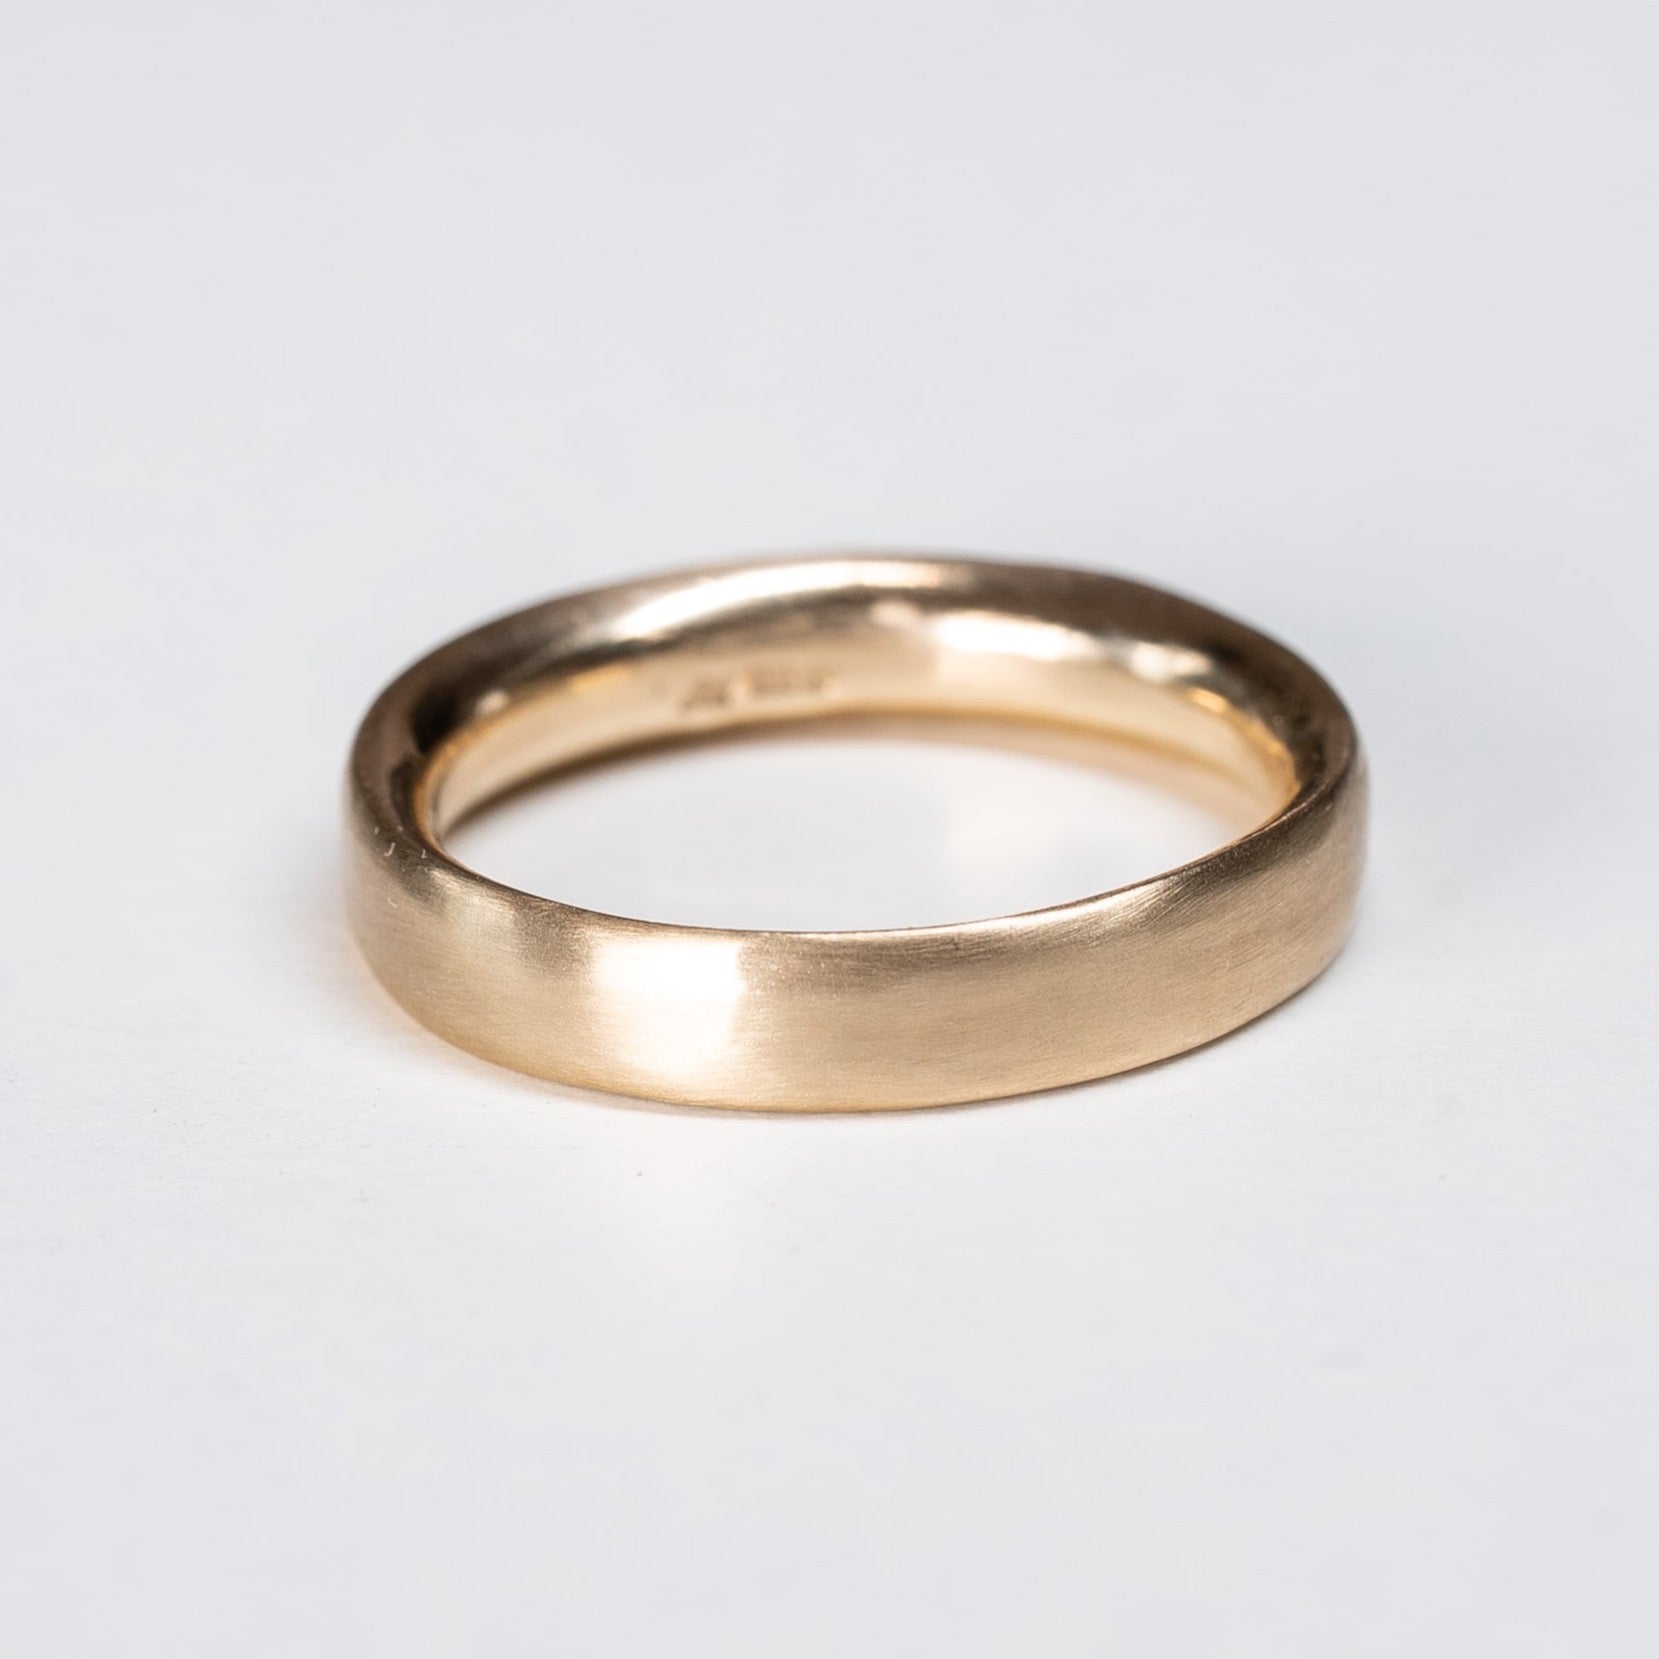 Classic gold wedding ring